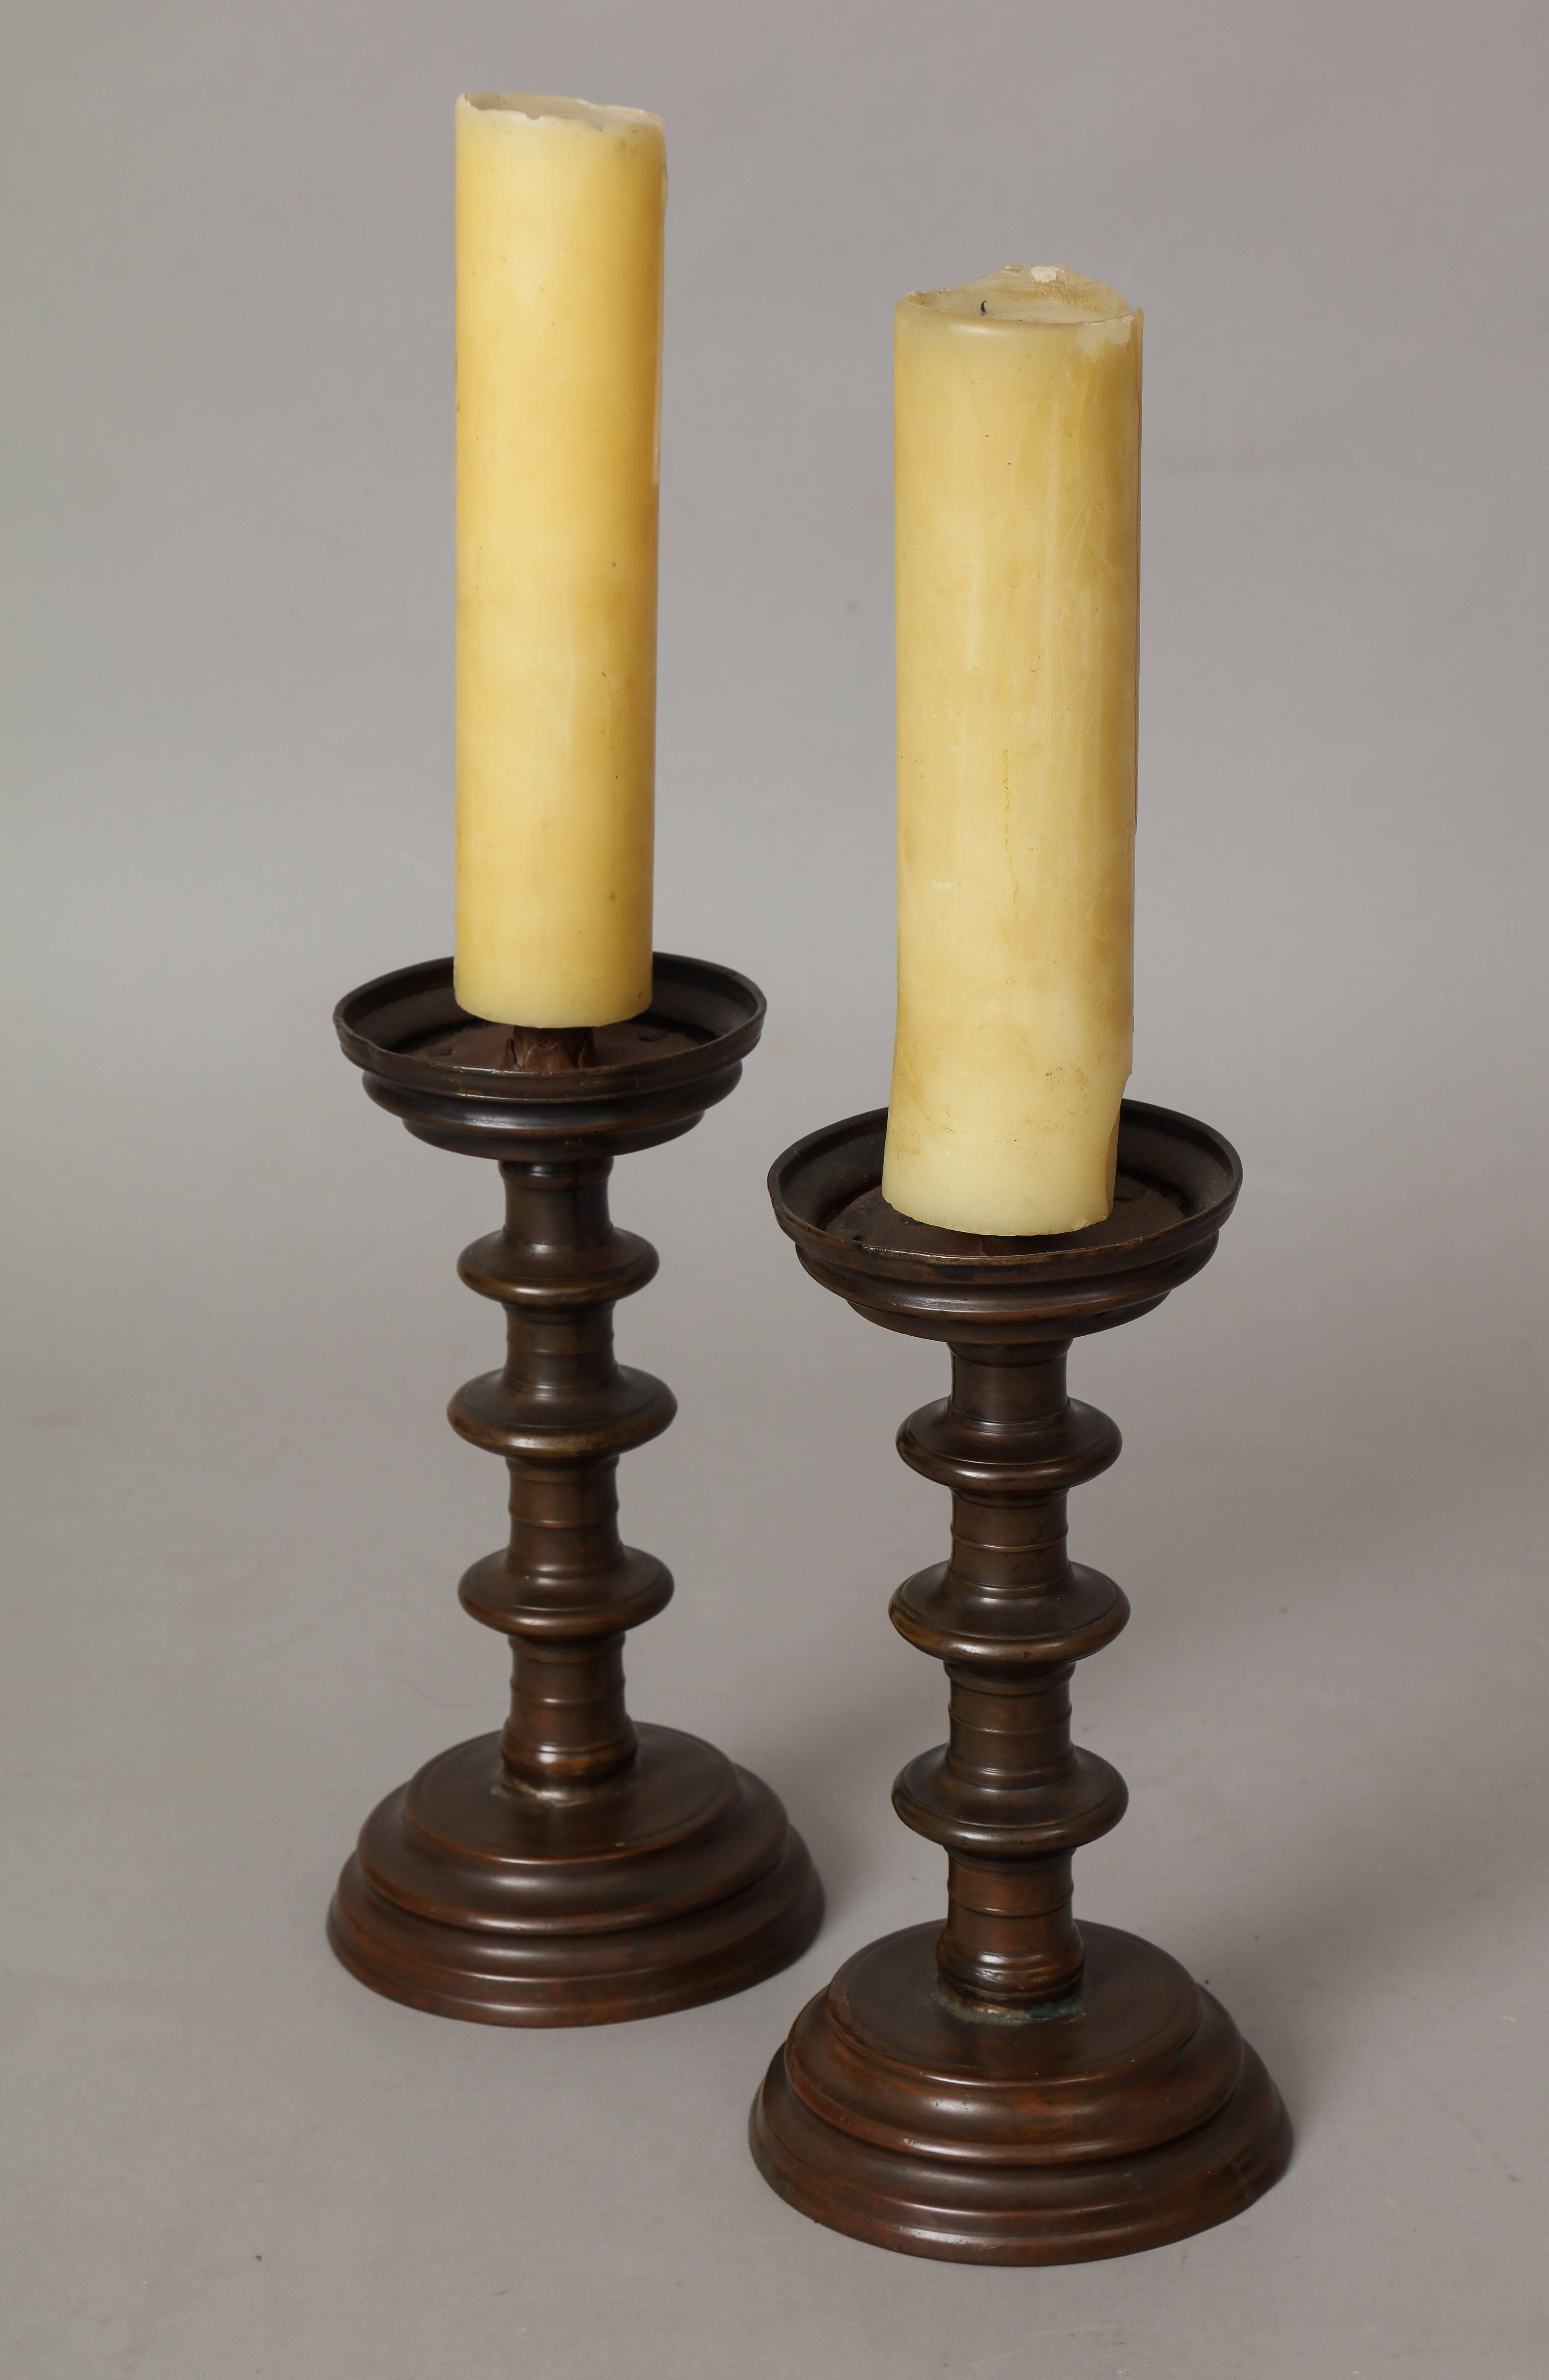 Pair of Italian Baroque period bronze pricket sticks bronze (old color).
Italian, circa 1620.
 